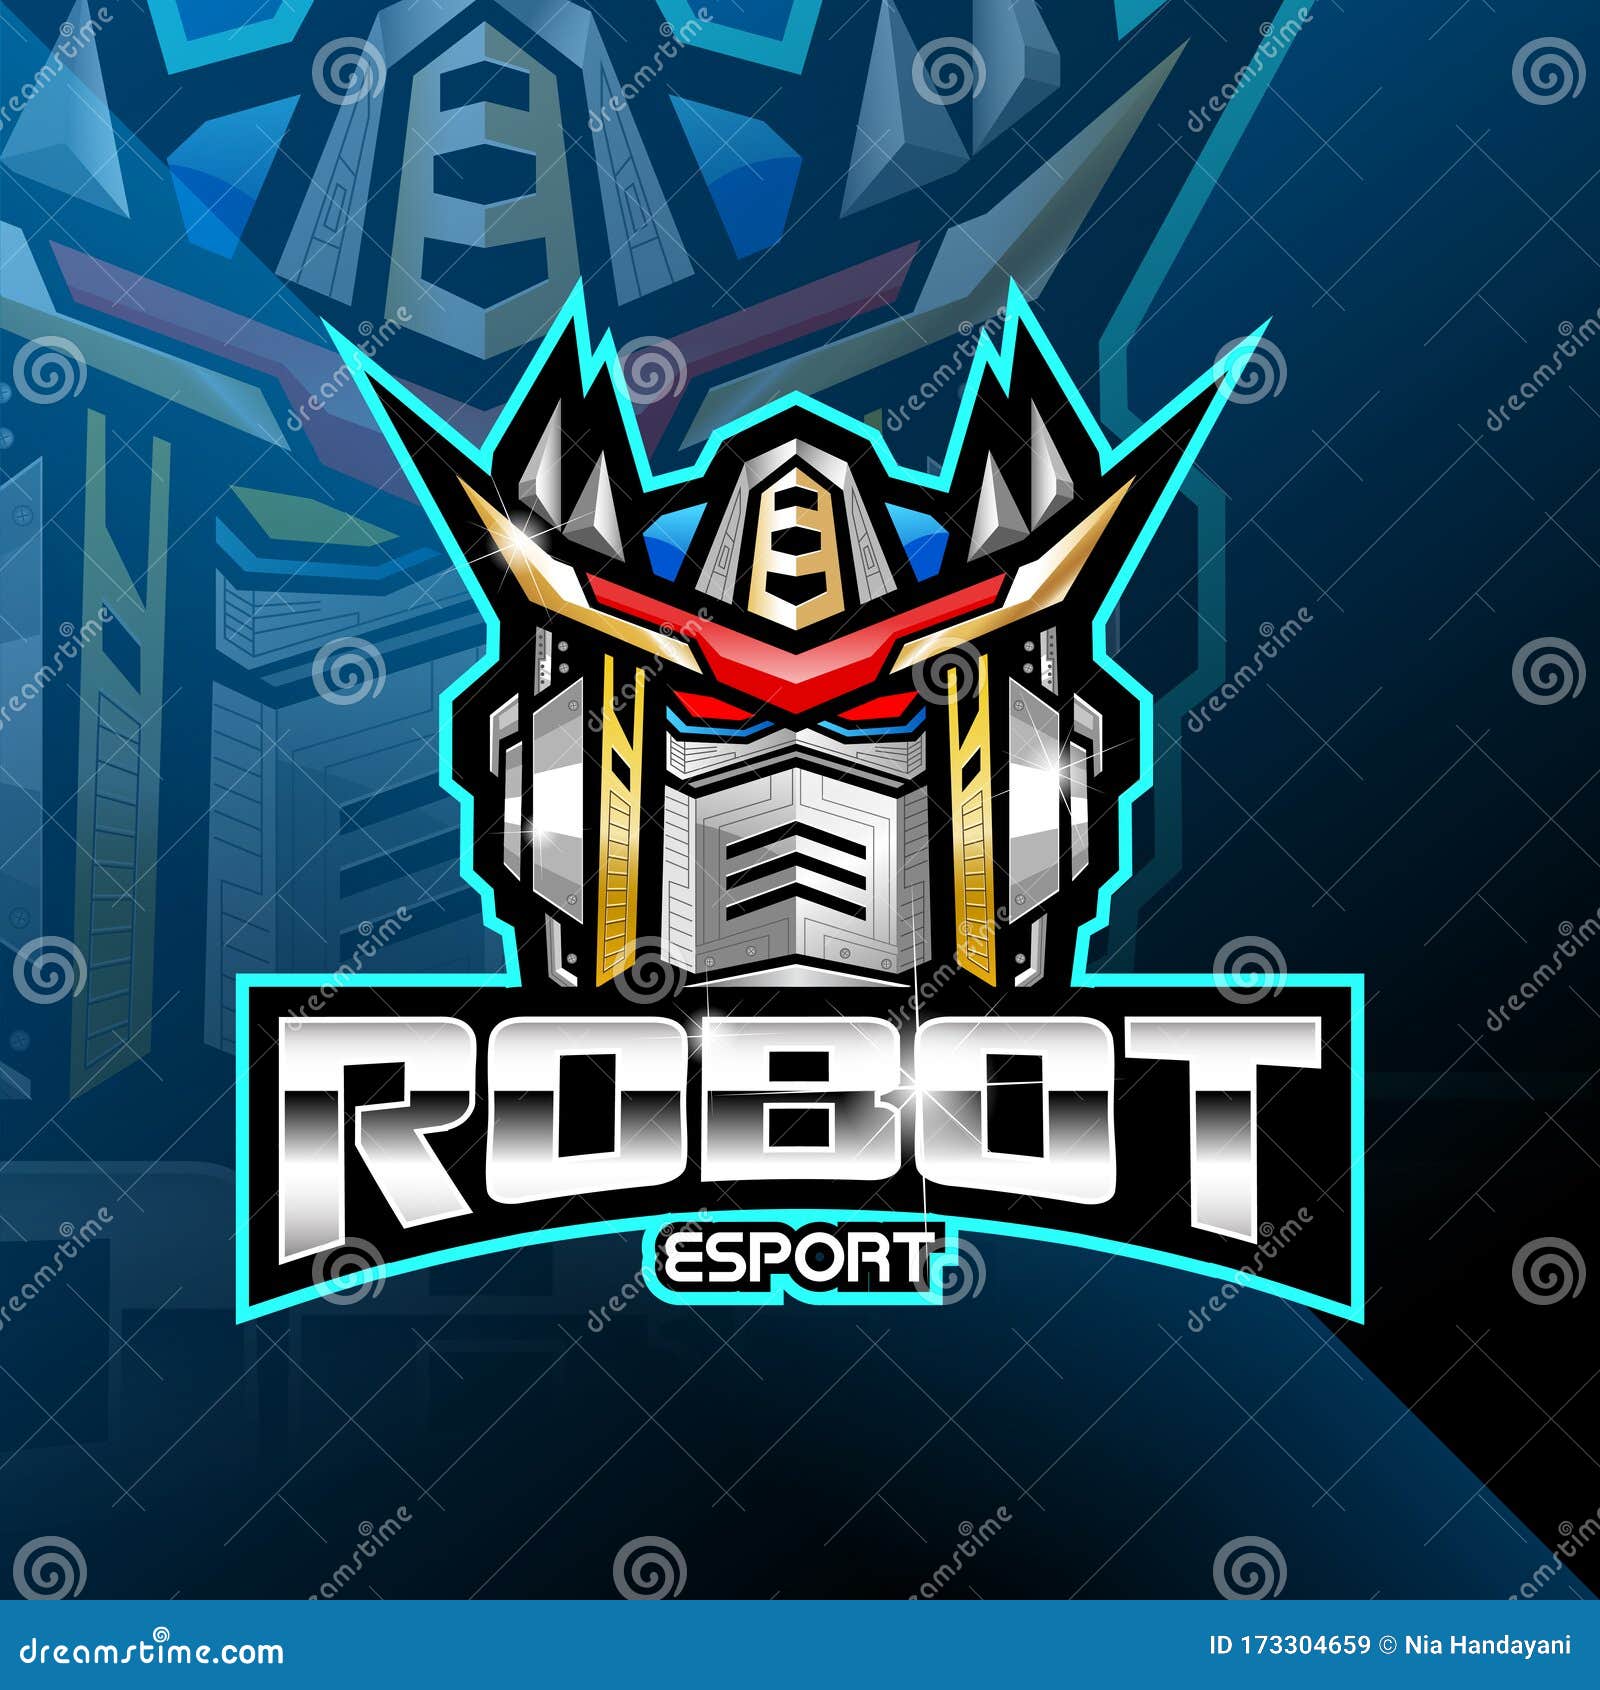 Illustration of Robot head esport mascot logo